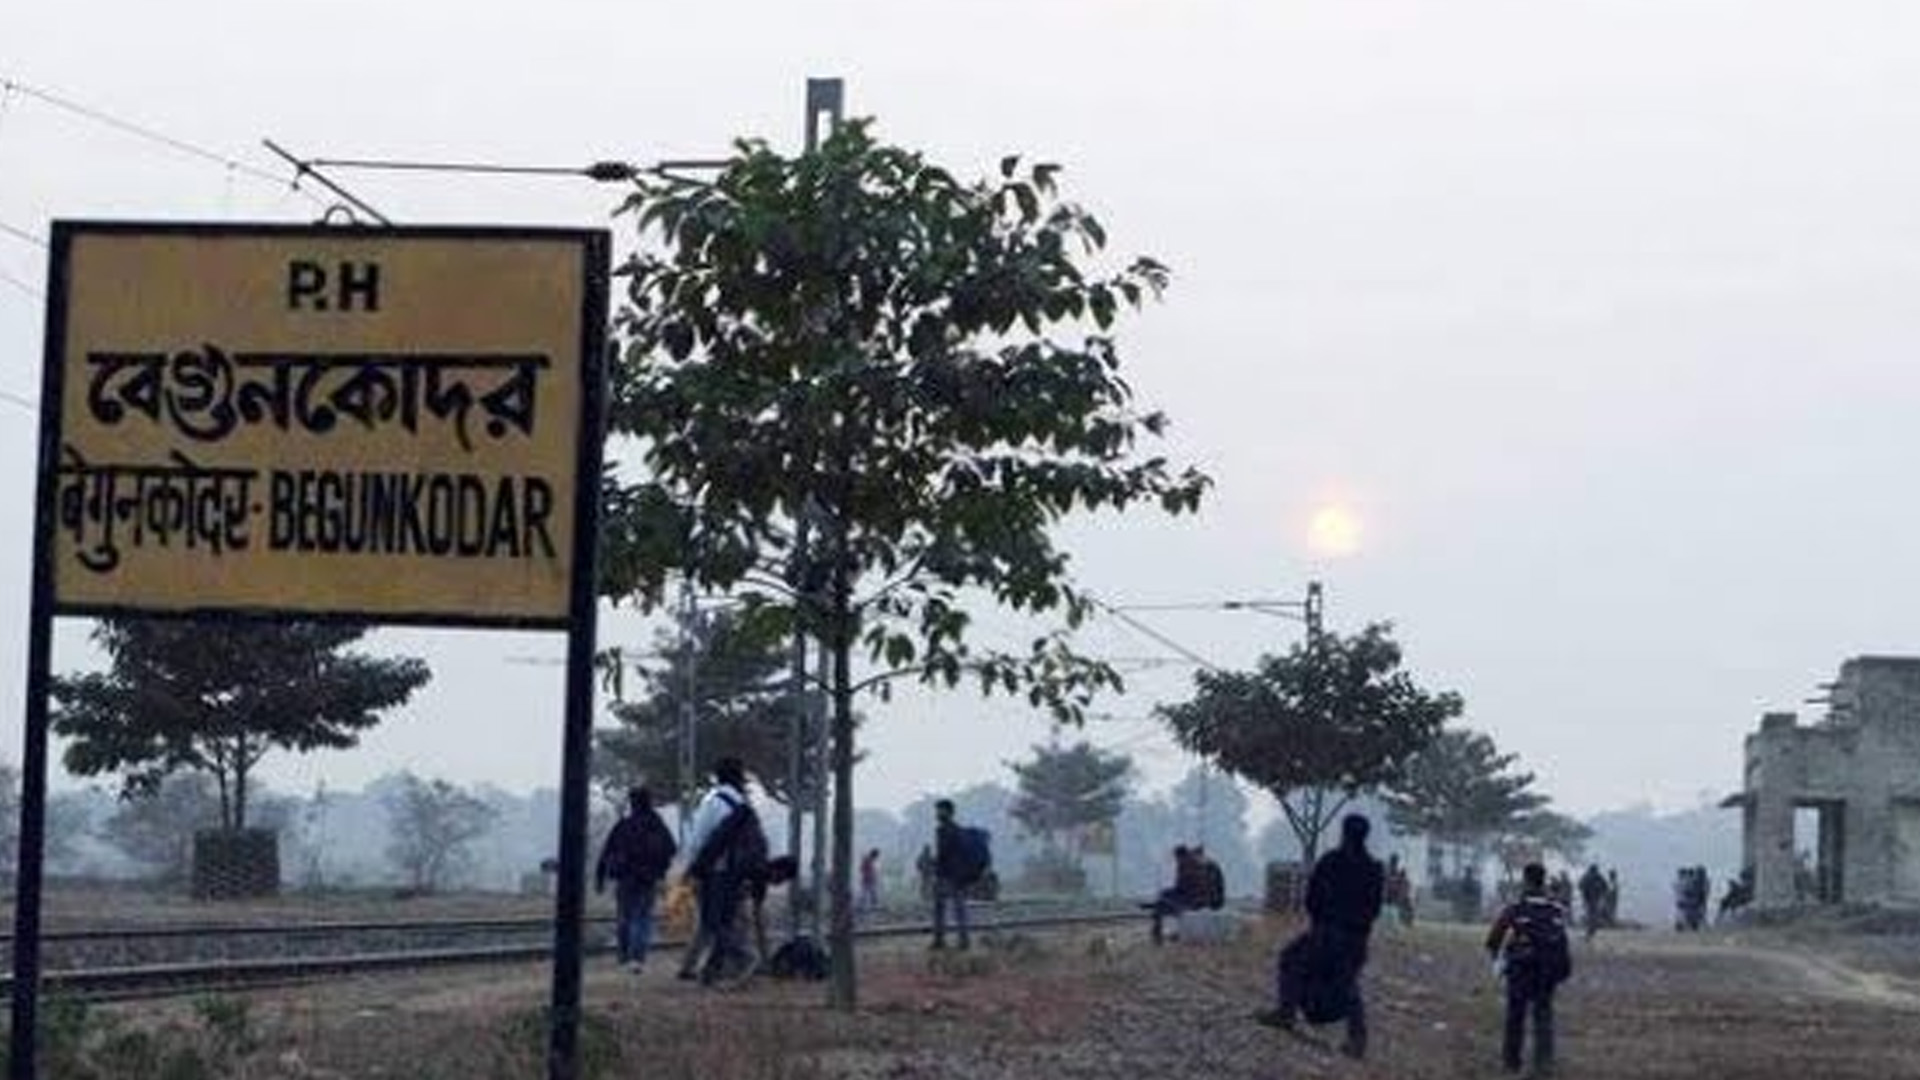 Begunkodor Station, West Bengal